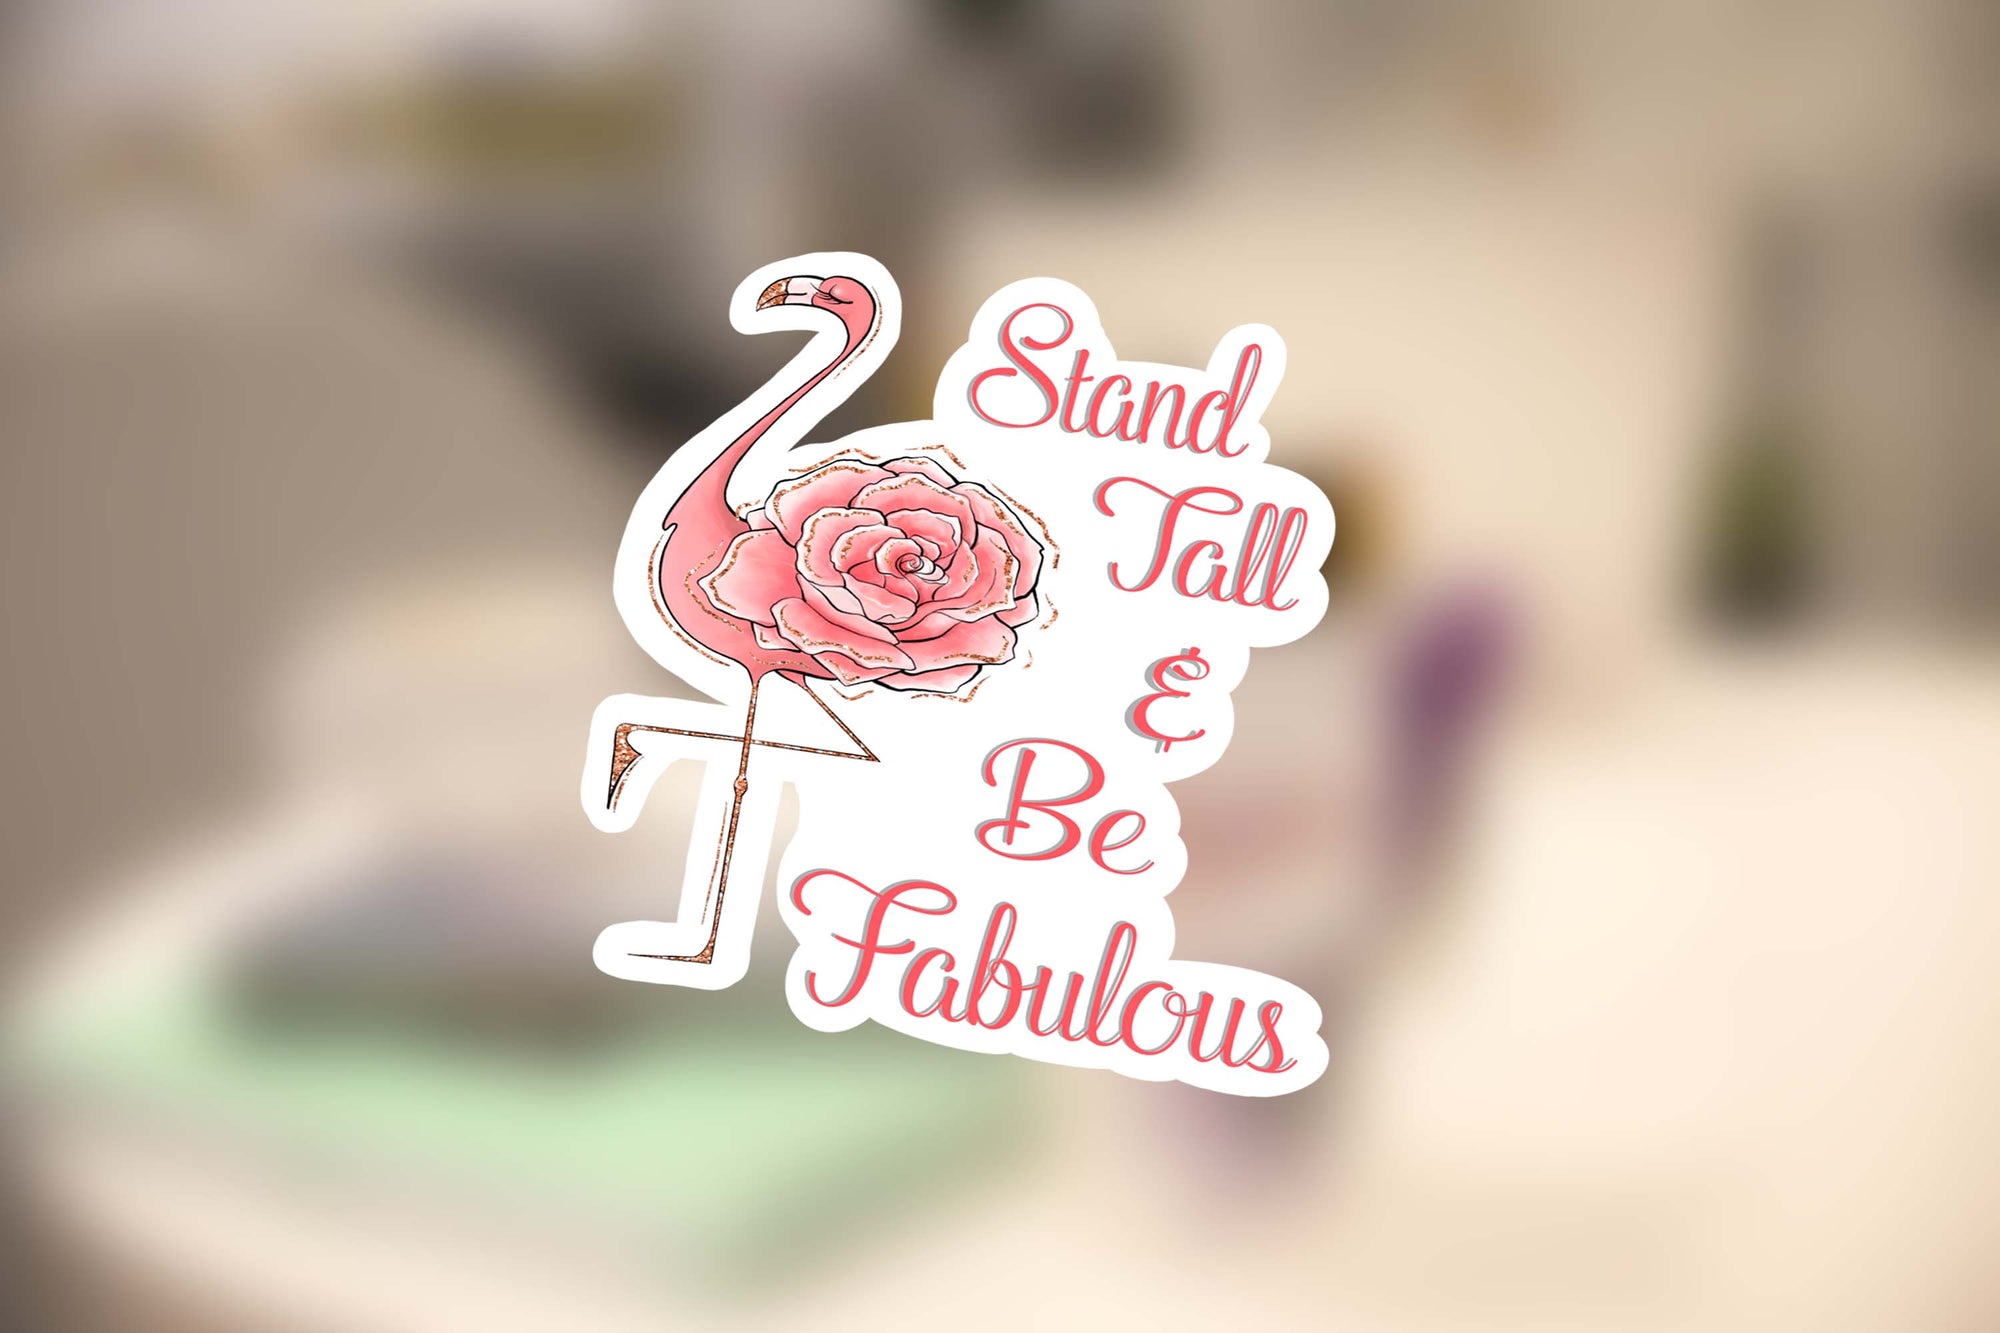 Stand Tall & Be Fabulous Sticker